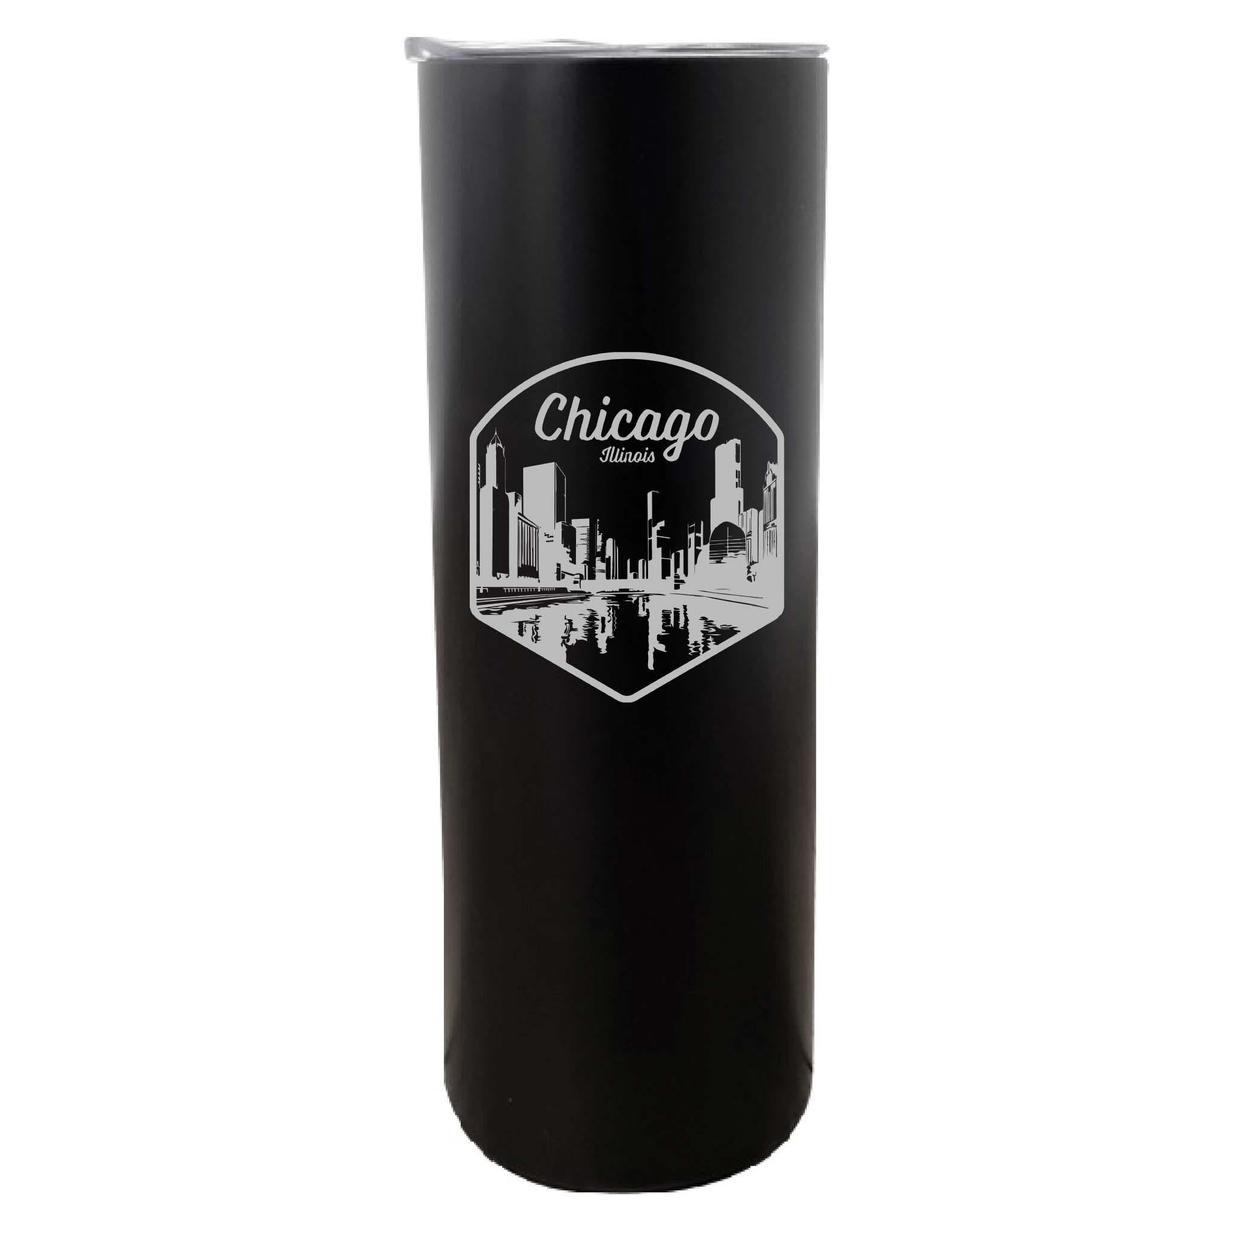 Chicago Illinois Souvenir 20 Oz Engraved Insulated Skinny Tumbler - Gray Glitter,,Single Unit